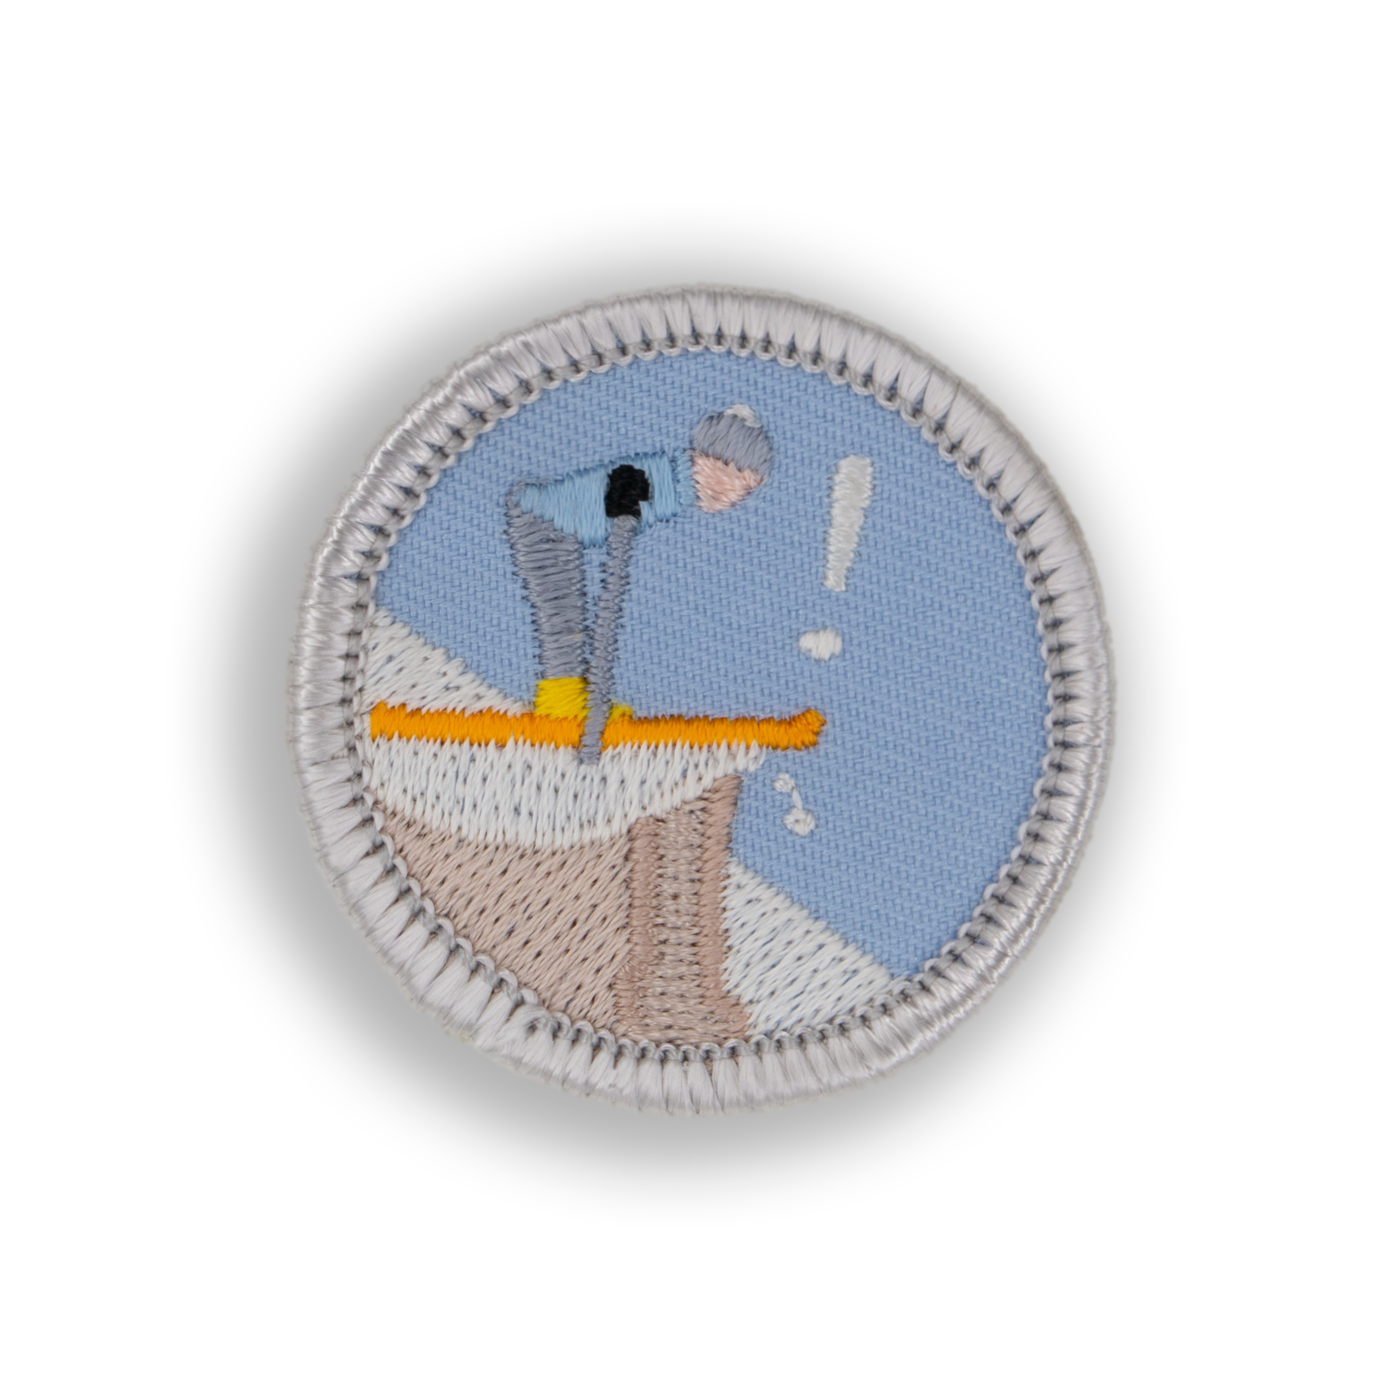 Drop-in Ski Patch | Demerit Wear - Fake Merit Badges